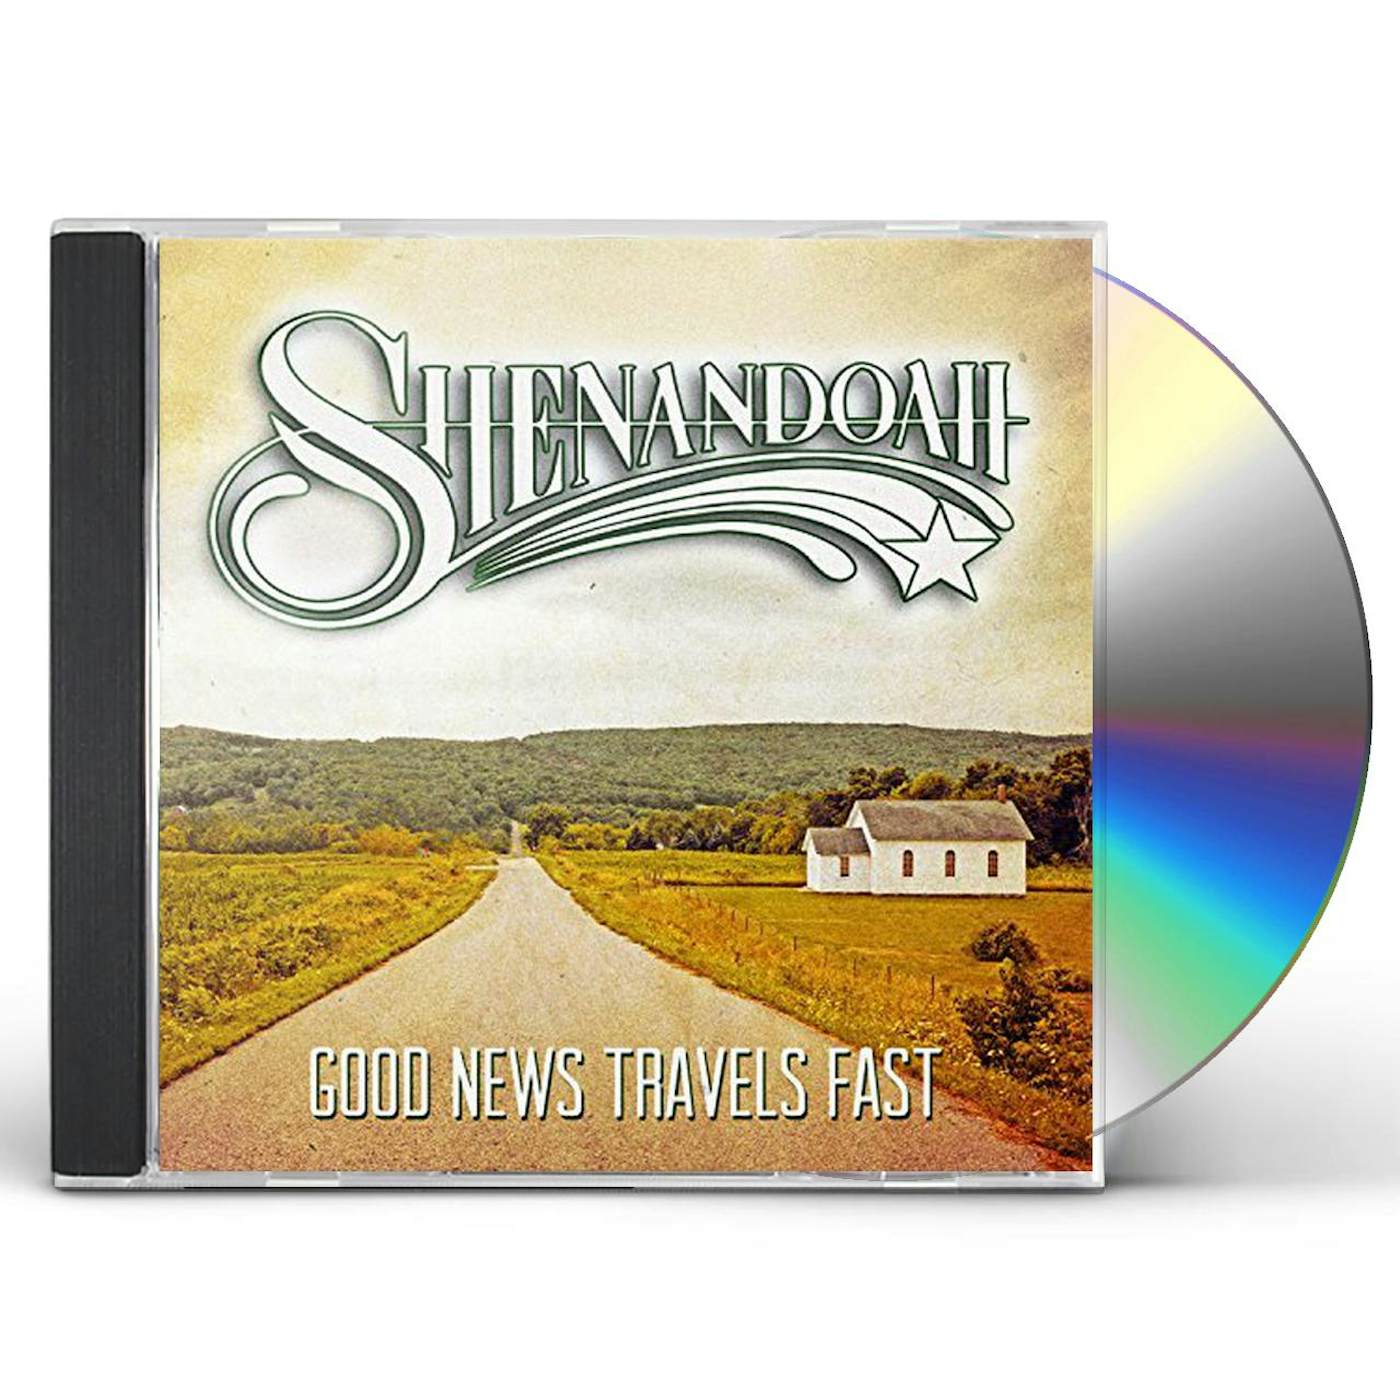 Shenandoah GOOD NEWS TRAVELS FAST CD